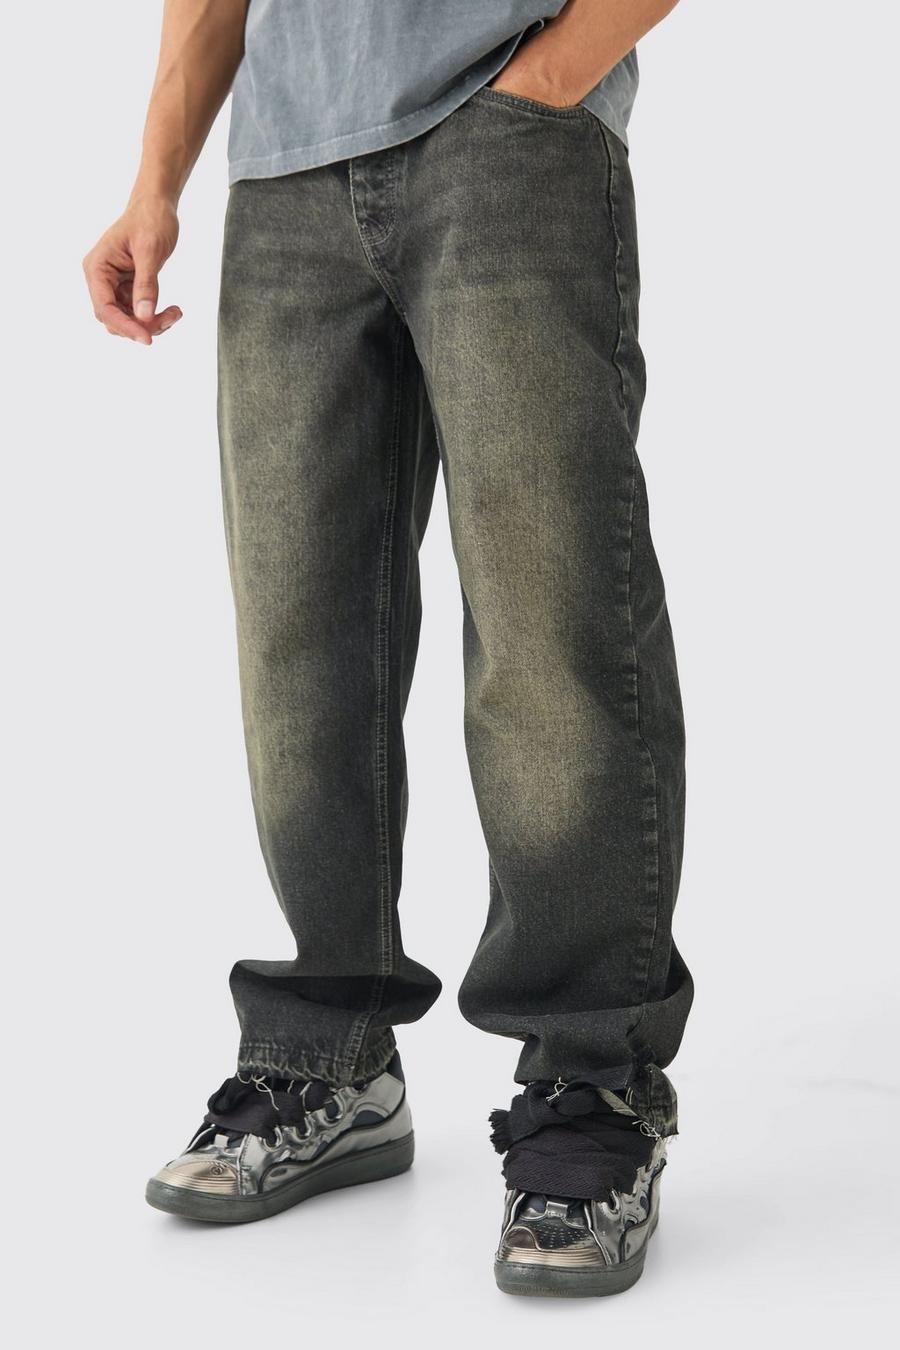 Lockere zerrissene Jeans in Grau, Grey